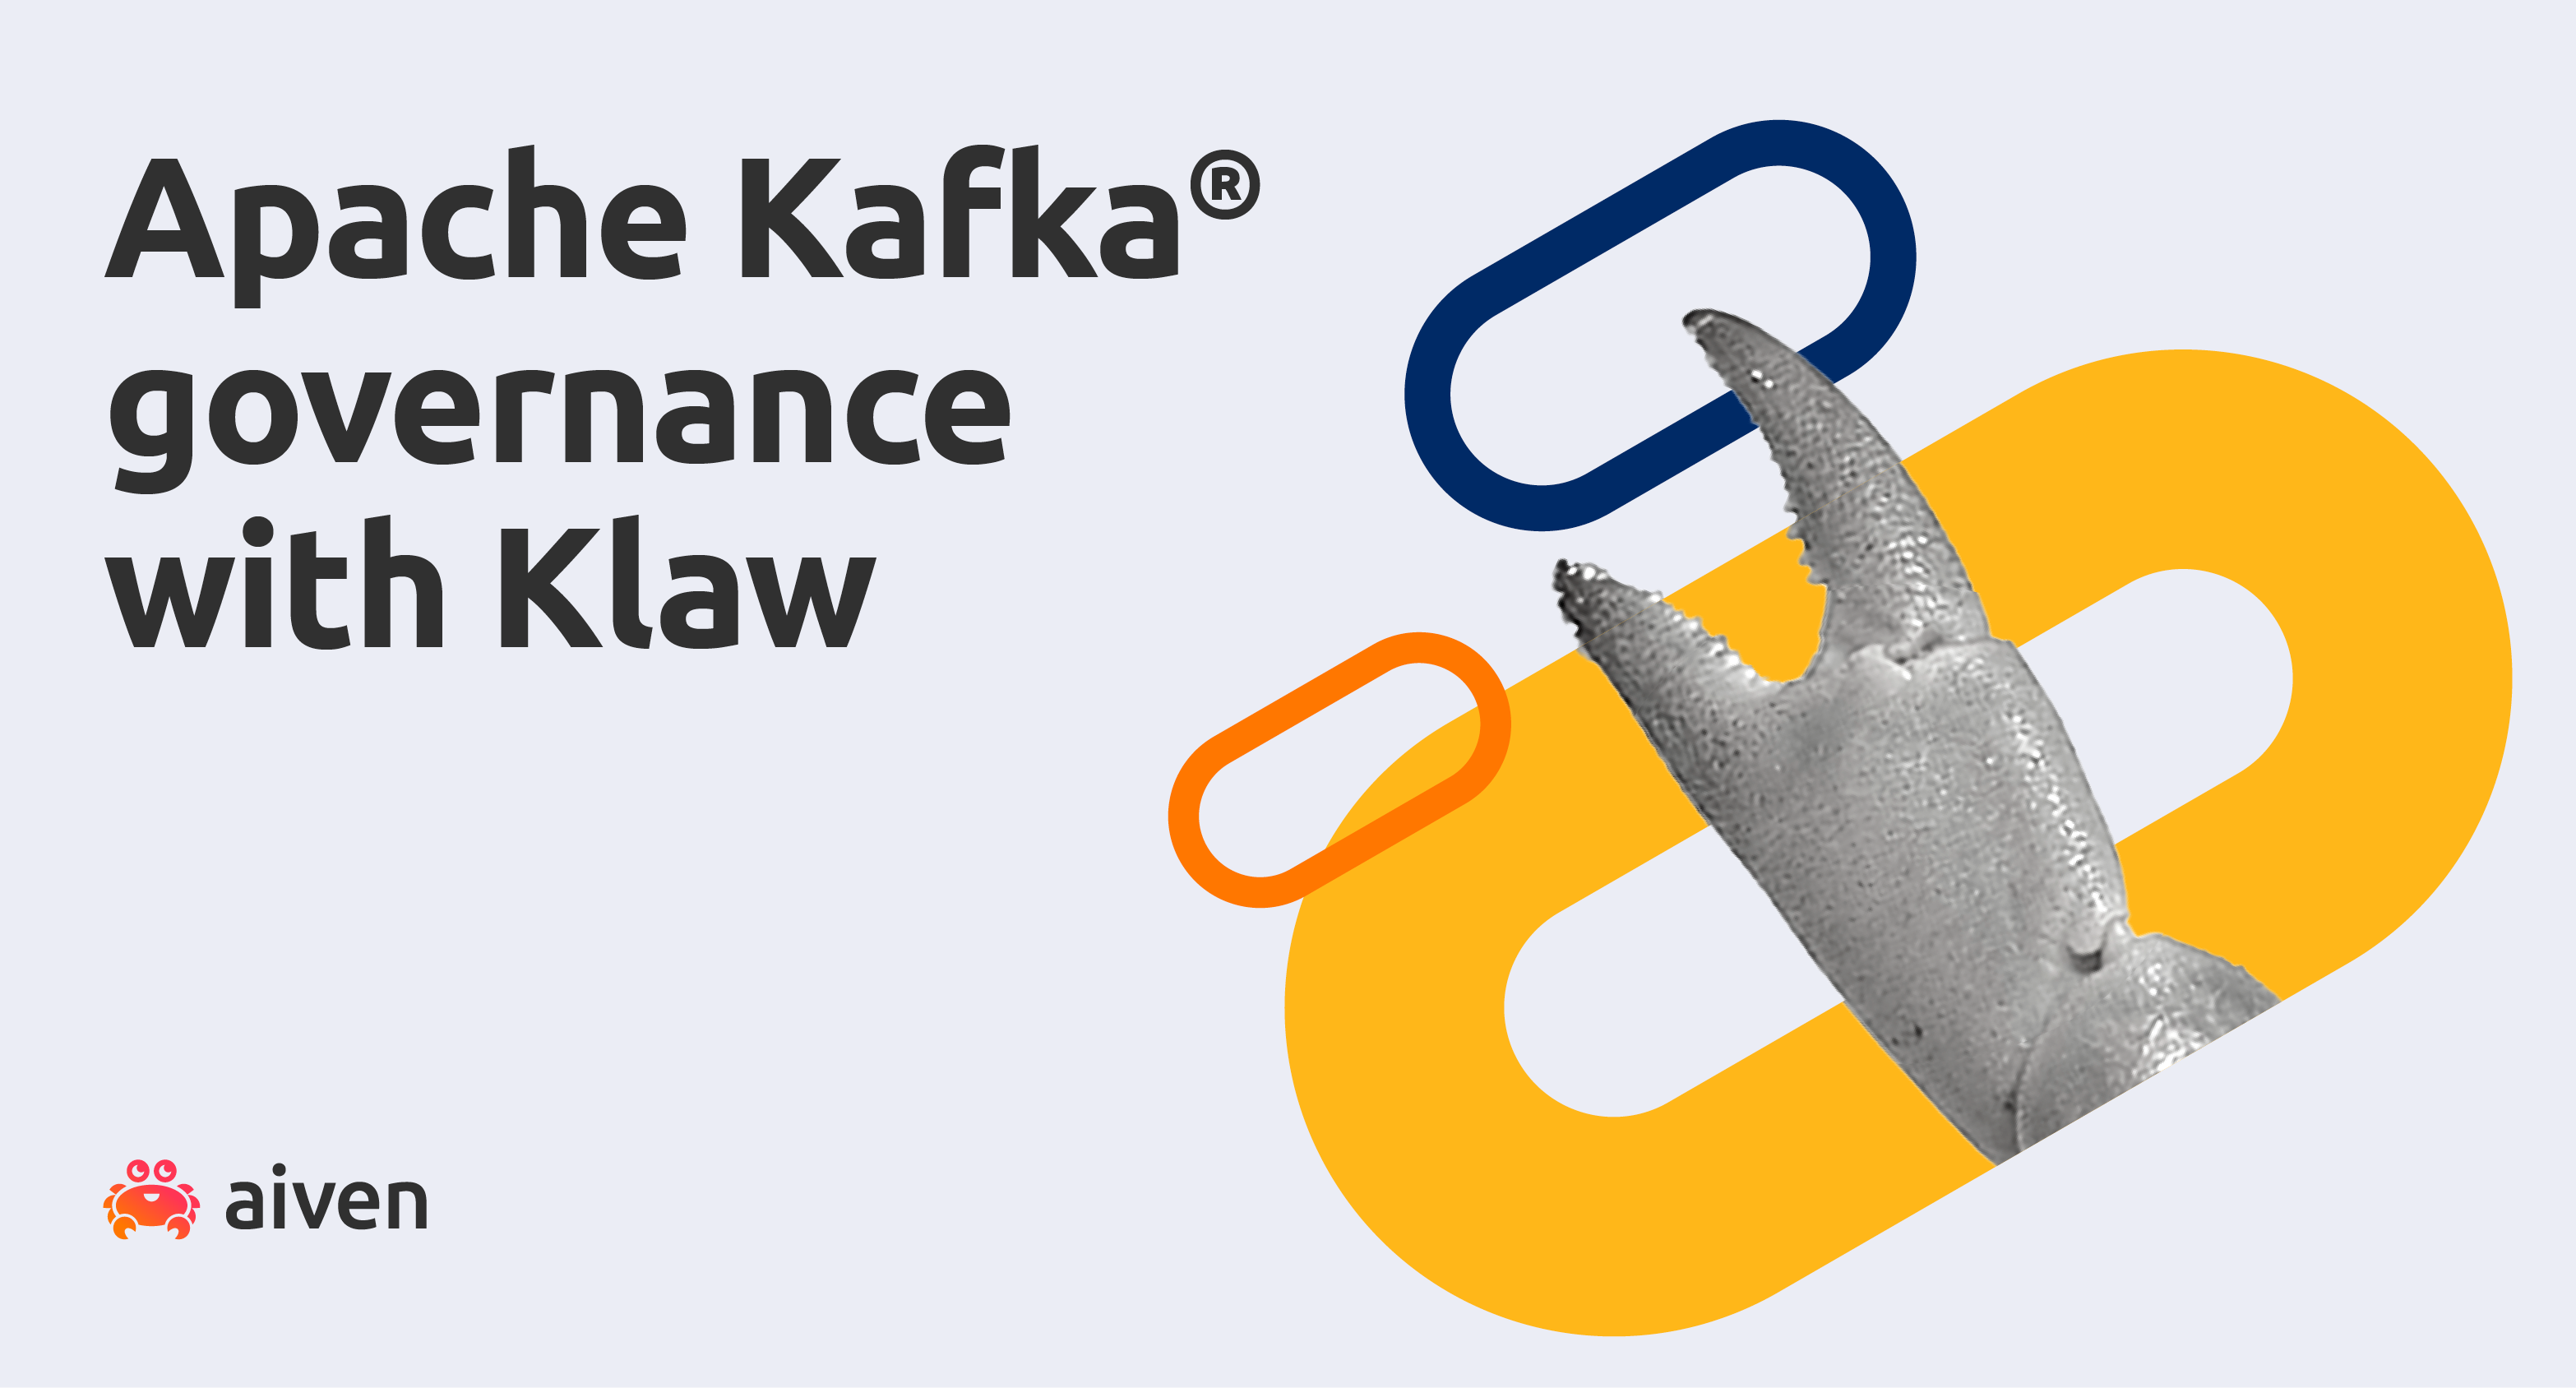 Introducing Klaw for Apache Kafka® governance illustration